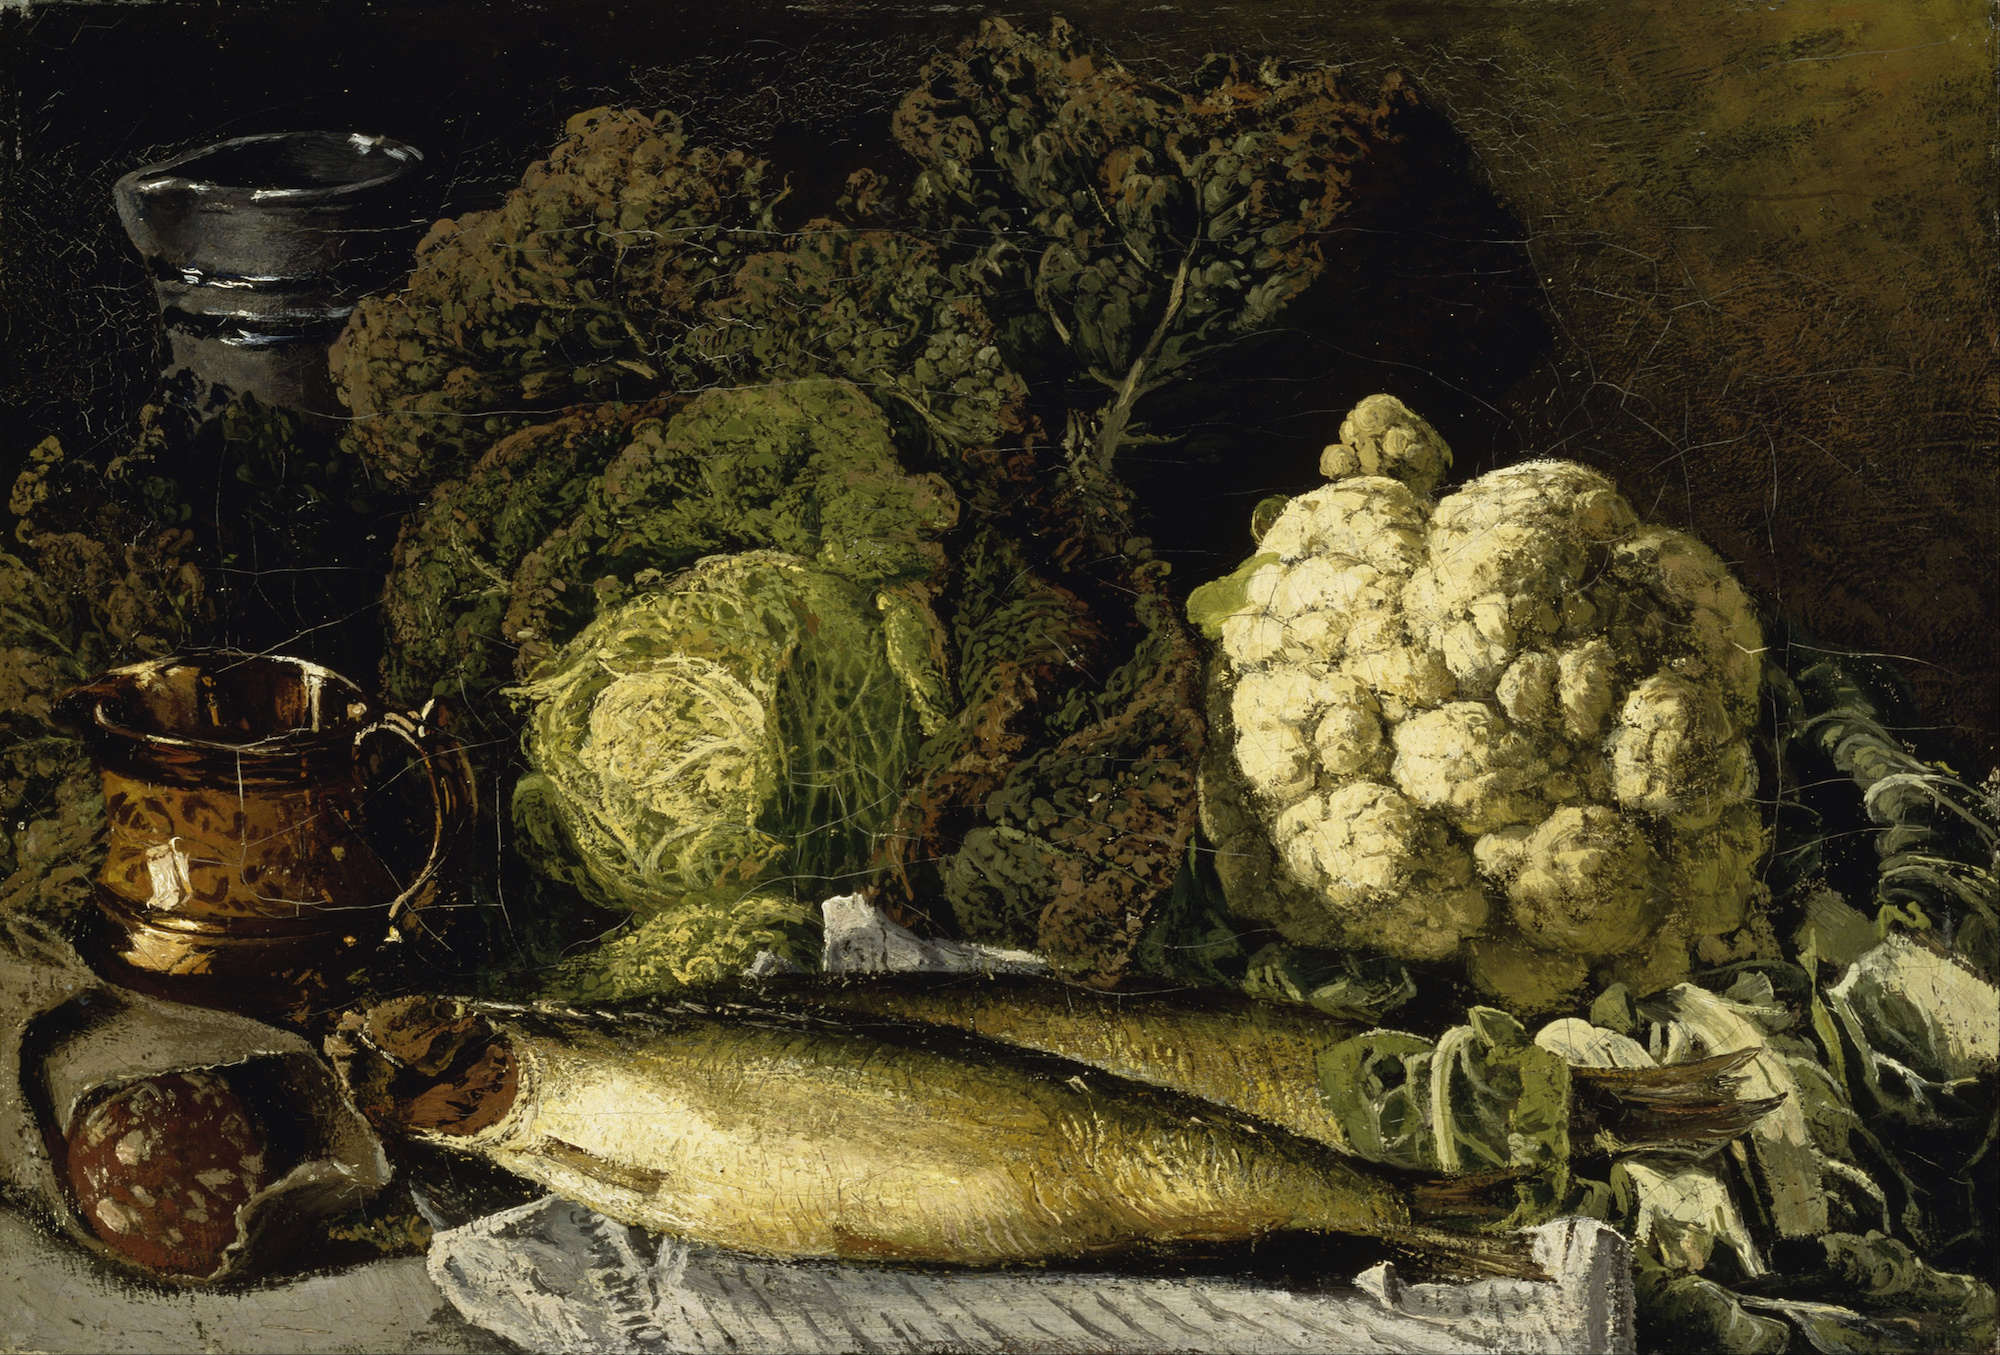 Martwa natura z warzywami i rybą by Fanny Churberg - 1876 - 56.5 x 38 cm 